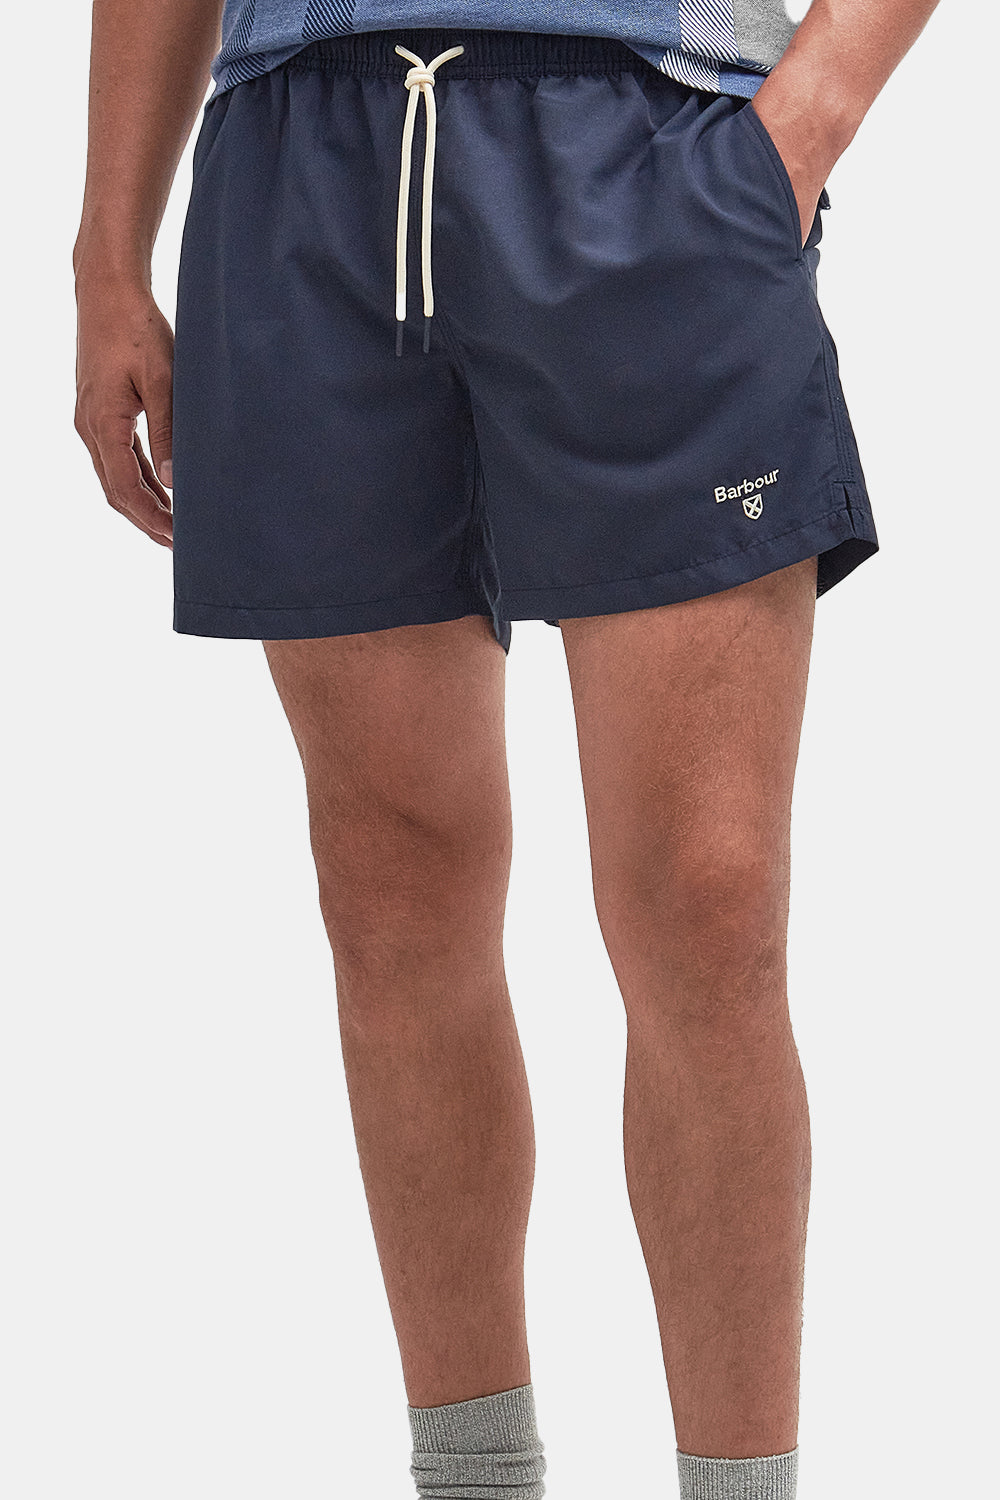 Barbour Staple Logo Swim Shorts (Navy)
